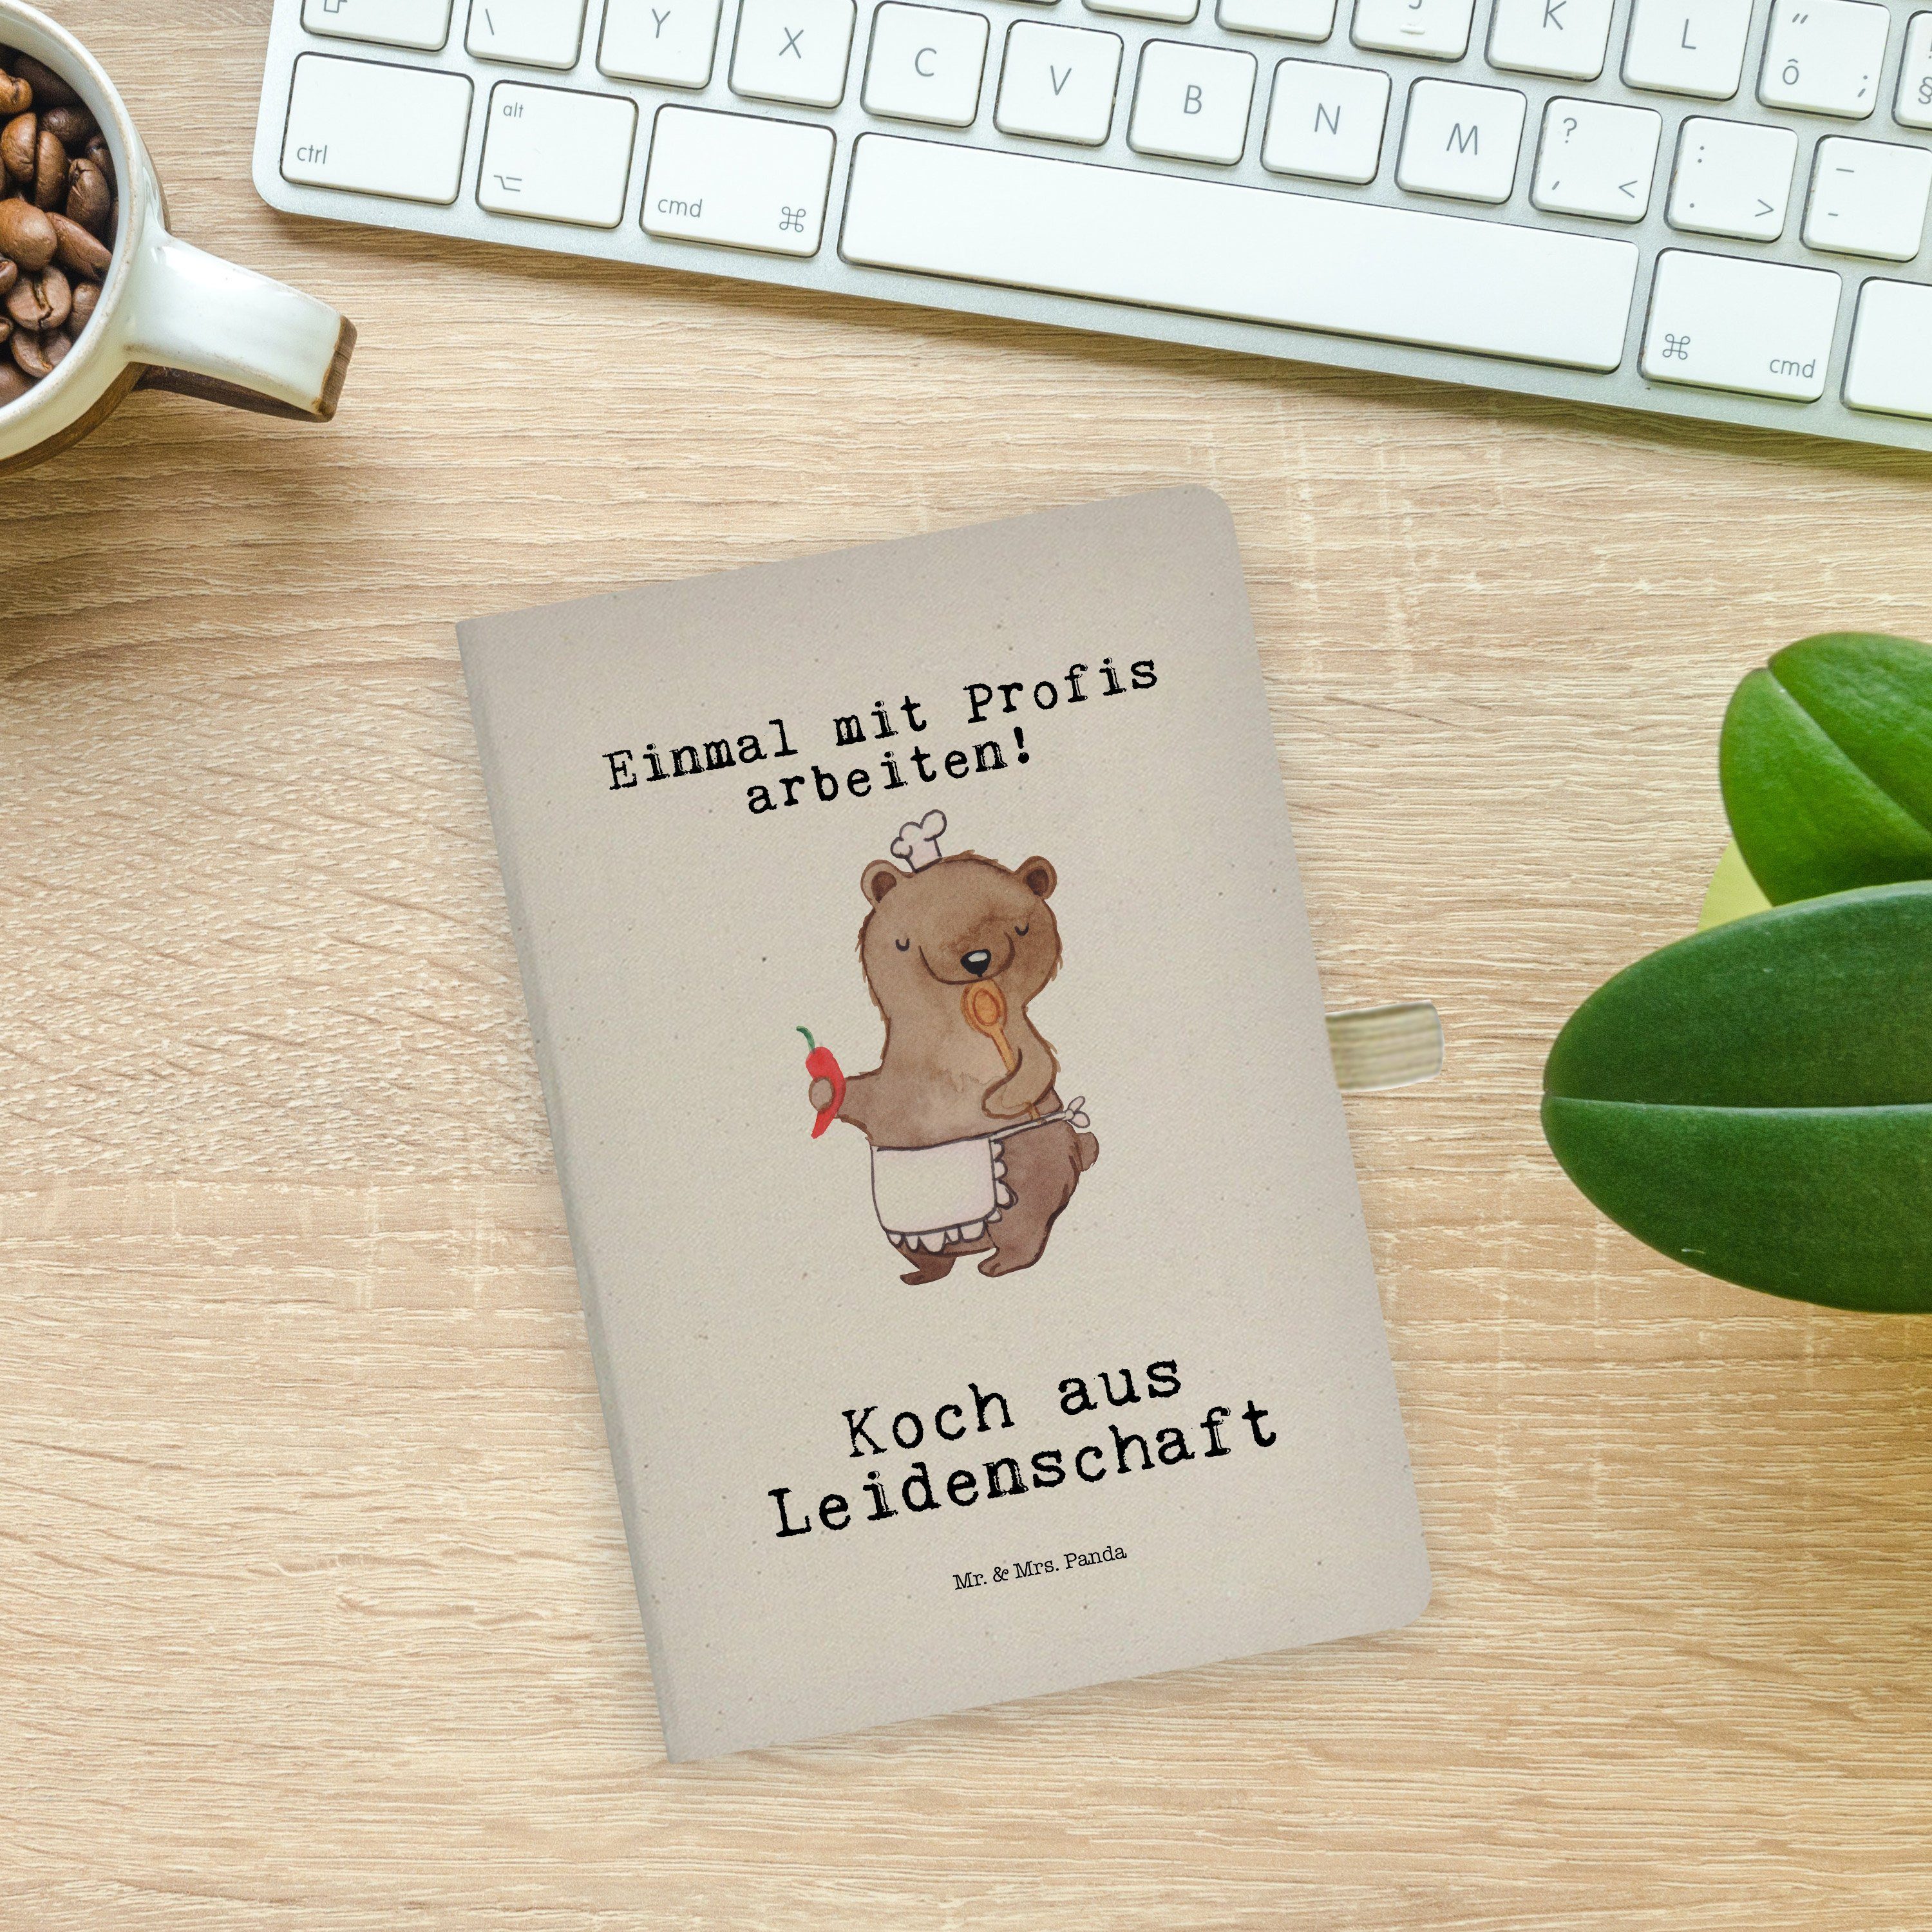 Mr. & Panda Transparent aus & - Notizbuch Mrs. Panda Abschied, Geschenk, Mrs. Mr. Leidenschaft - Notizblock, Koch